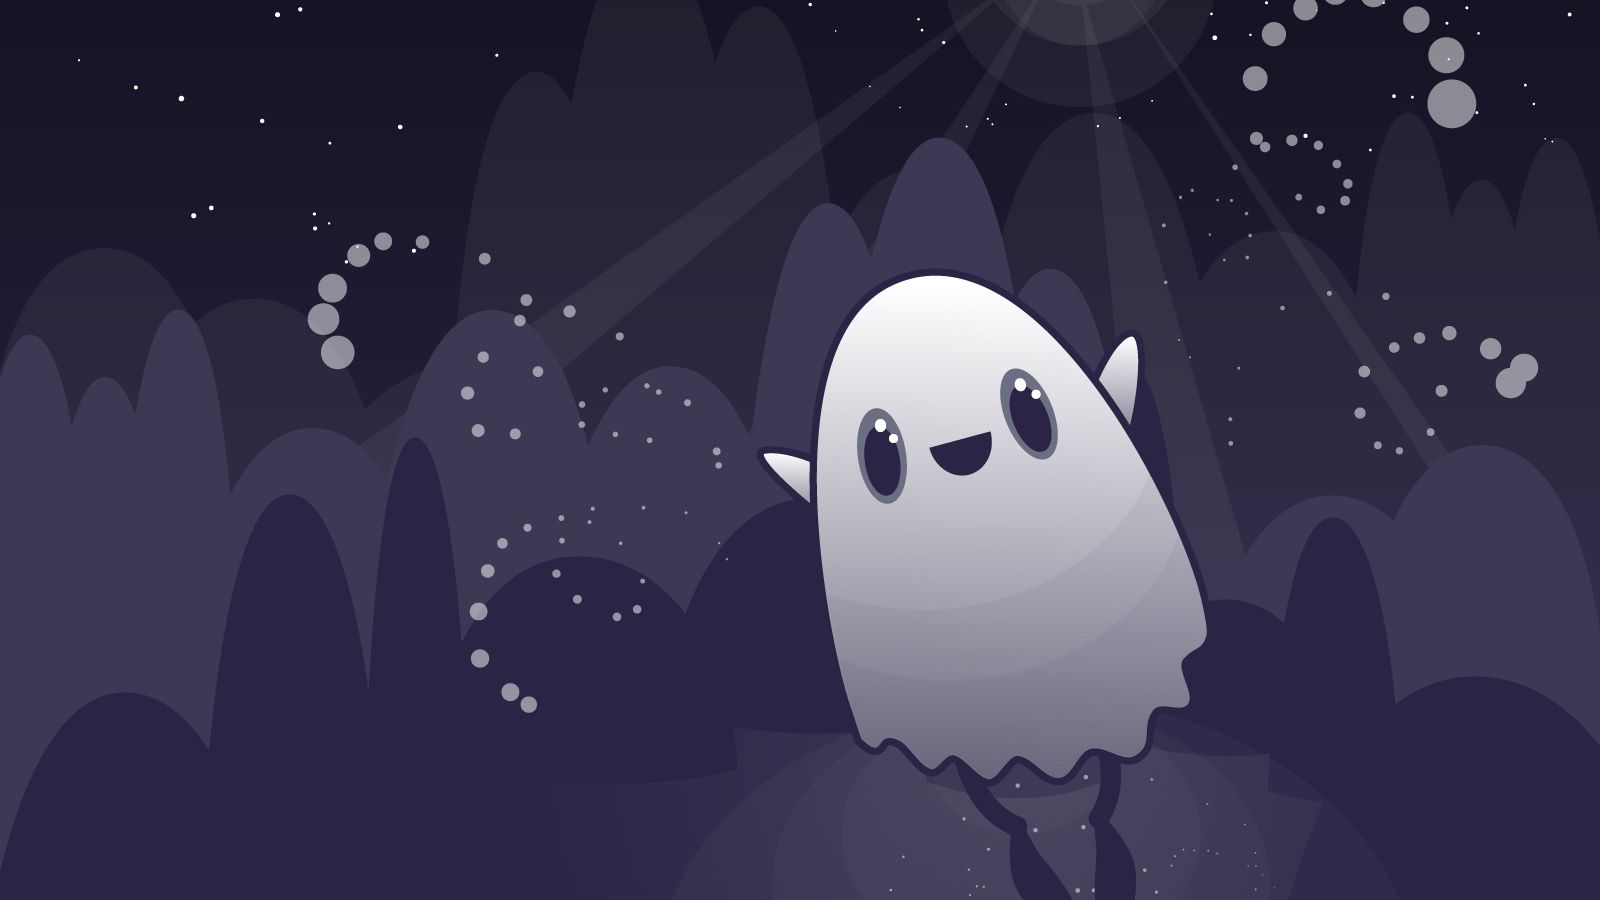 Free download Cute Ghost Wallpaper Bu the ghosts night flight